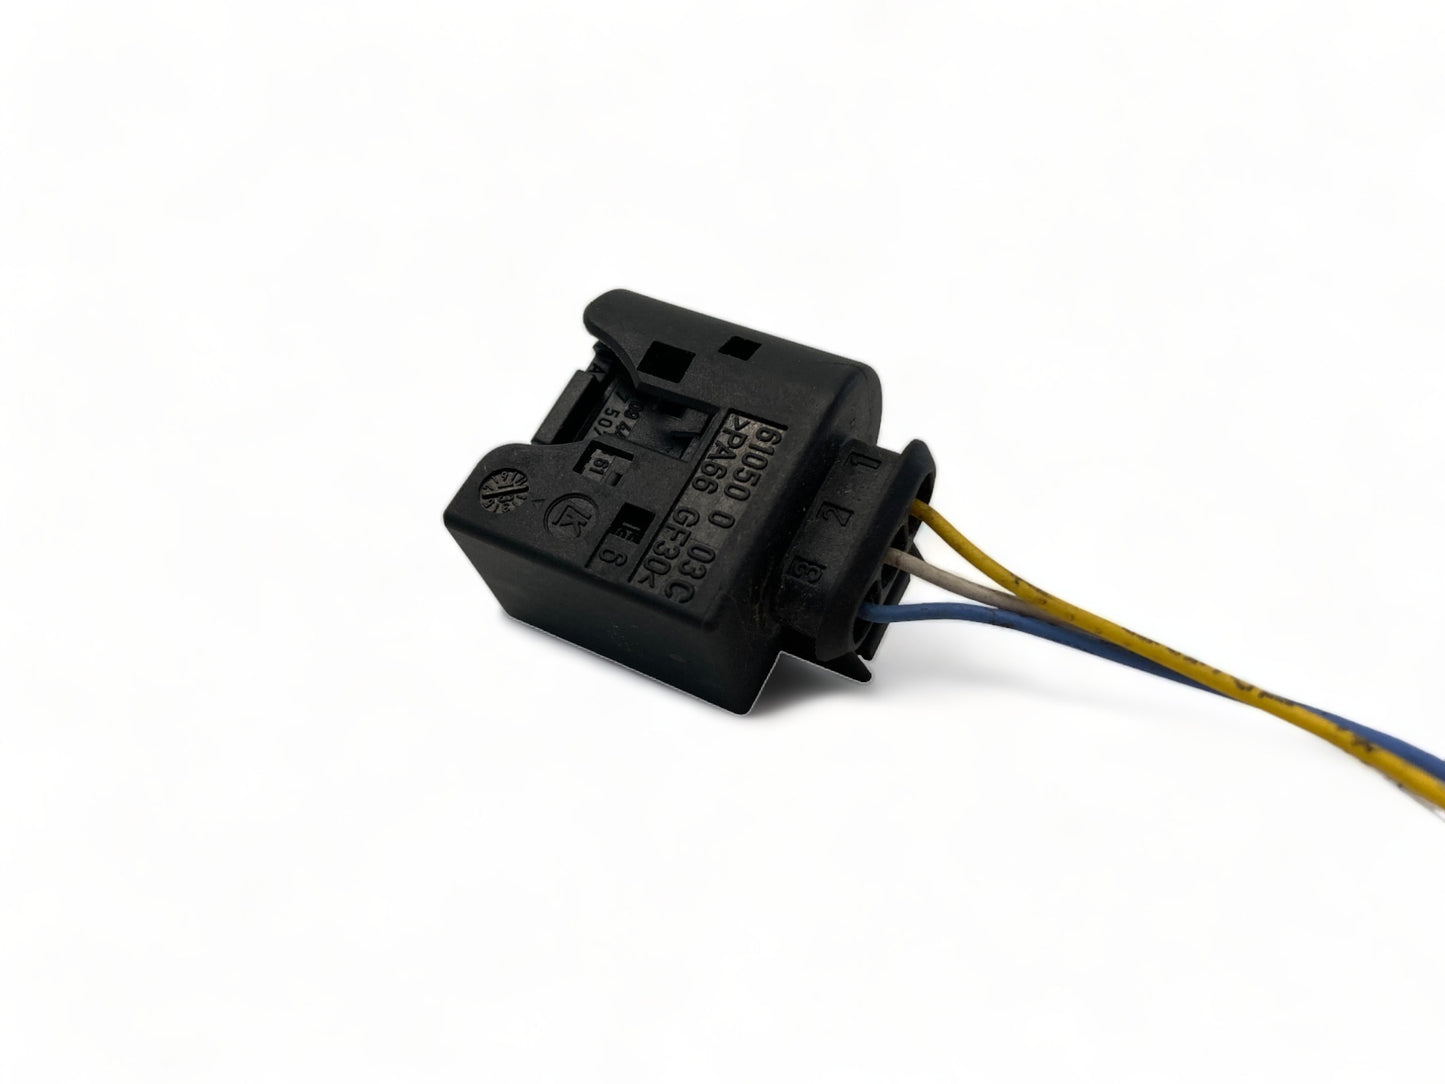 Mini Cooper N18 Fuel Rail Pressure Sensor Connector 11-16 R5x R6x